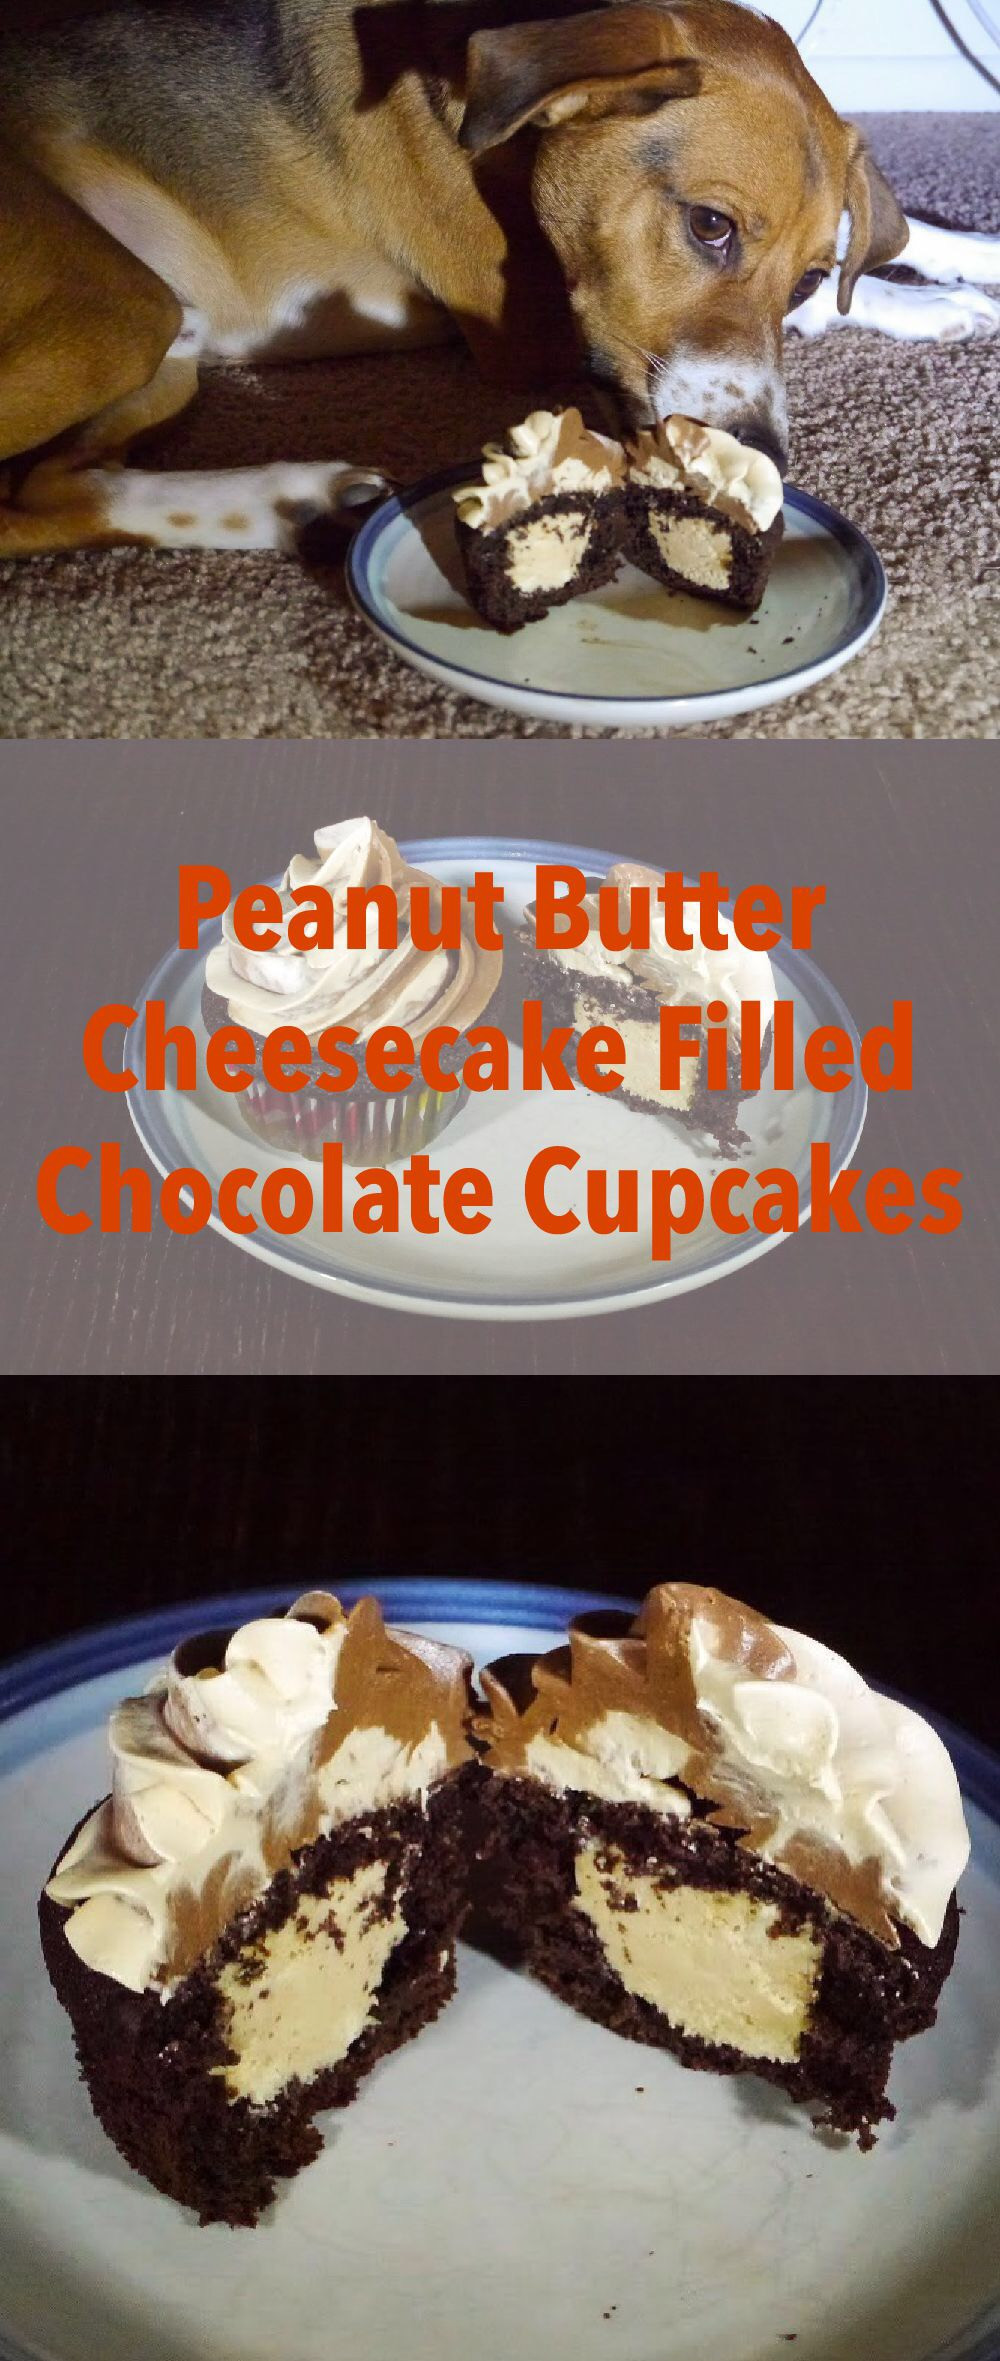 Cheesecake Filled Cupcakes
 Chocolate & Peanut Butter Cheesecake Filled Cupcakes